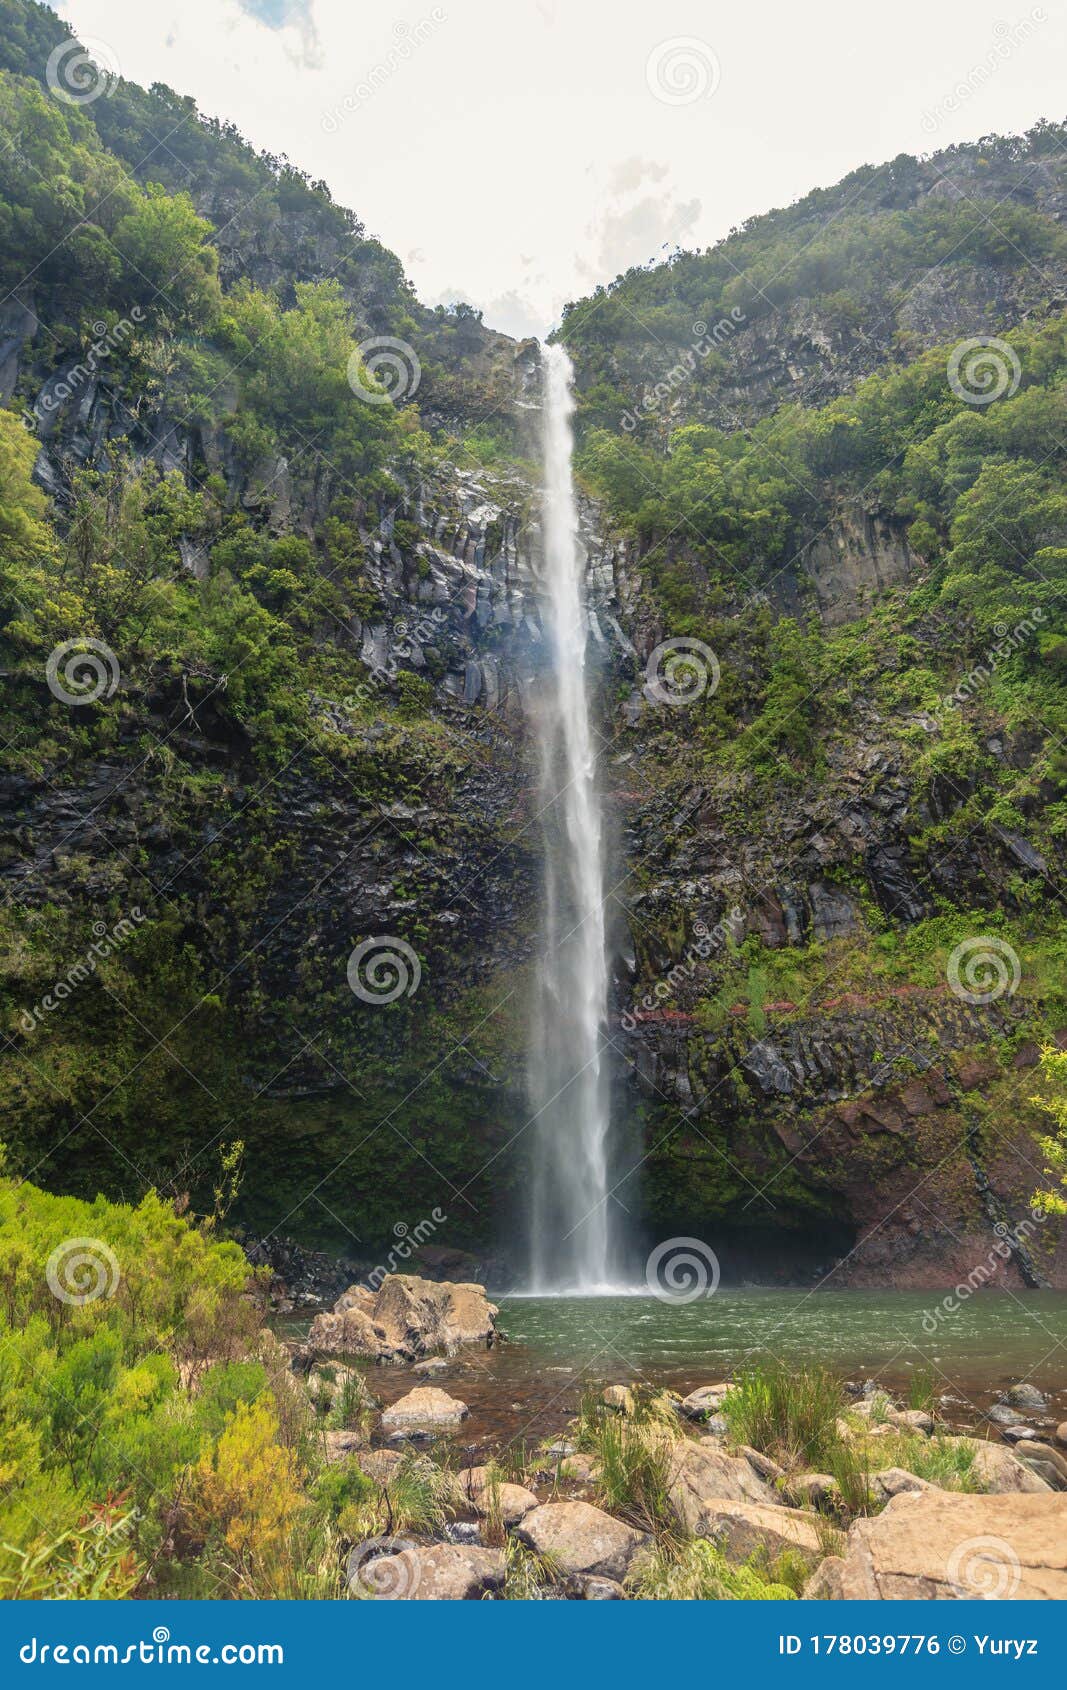 lago vento waterfall